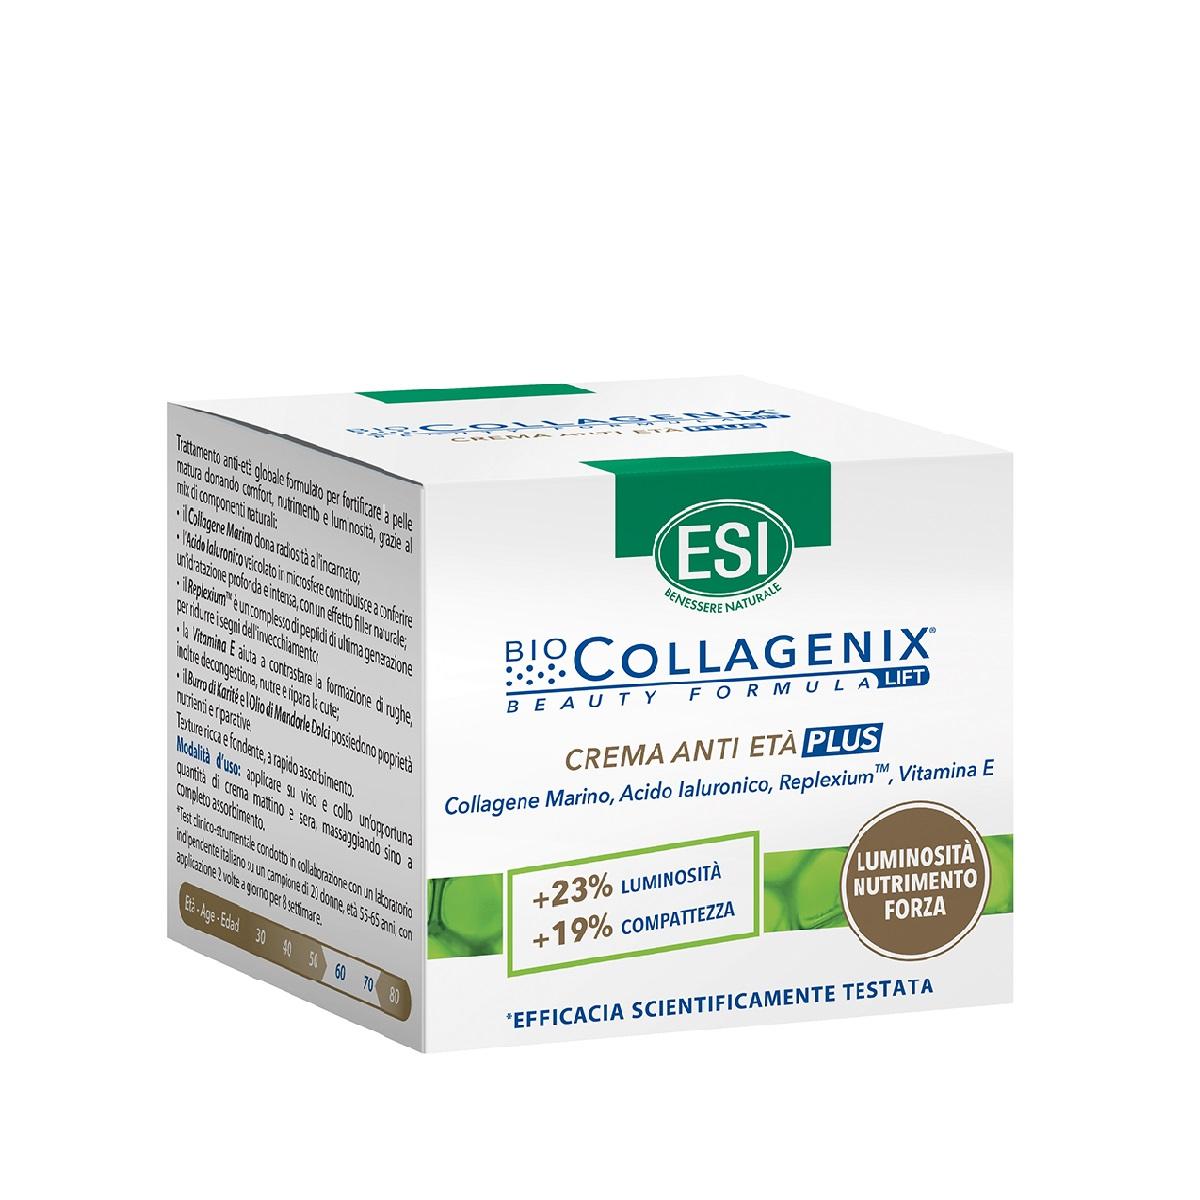 ESI Anti-age Plus krema za lice Biocollagenix 50ml